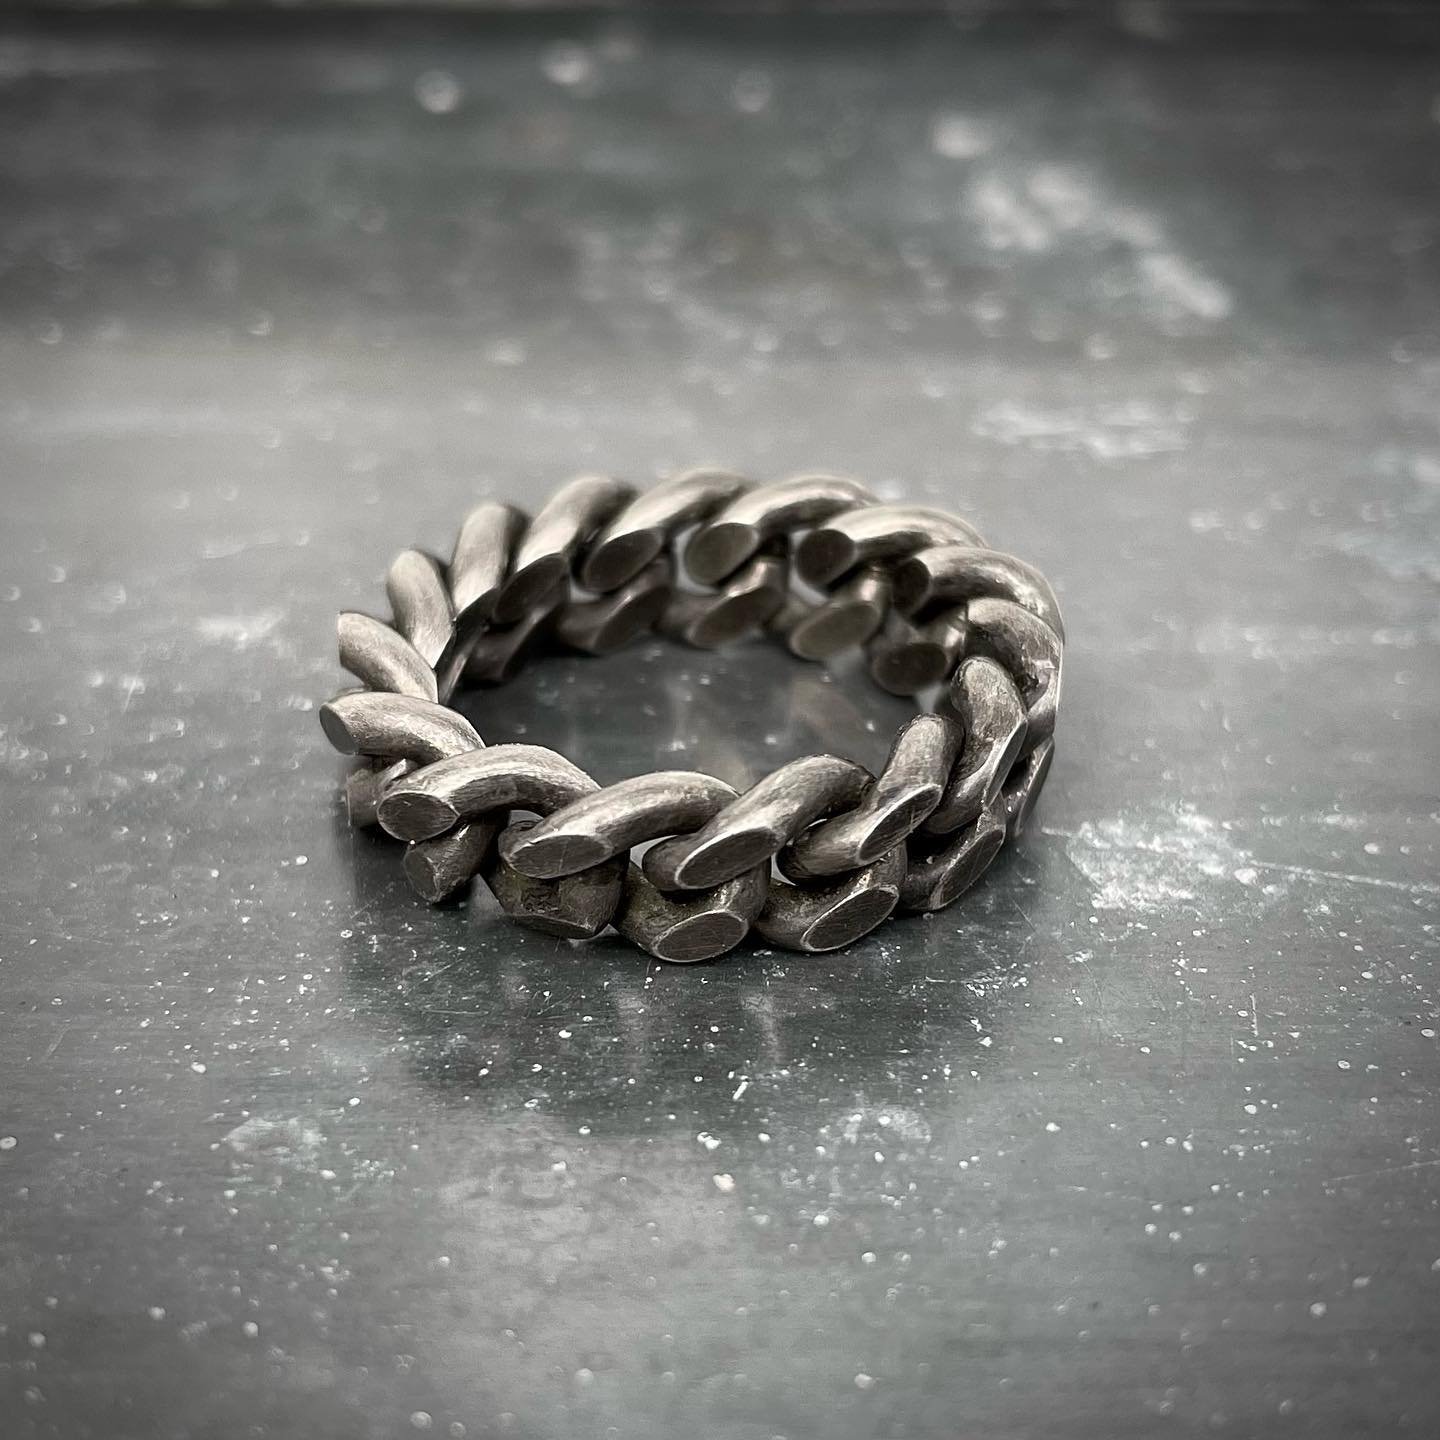 ⛓⛓CHAIN ring - tank track. NOW ONLINE !.#chain #ring #rings #tanktrack #silverrings #tanktrack #instajewelry #silverjewelry #blacksilver #nongenderjewelry #buylesschoosewell #jewelrylover #blacklover #darkluxury #darkfashionstyle #blackandwhitephotography #bnw #selfportrait #blacklovers #statementjewelry #jewelry #slowfashionstyle  #urbanstyle #minimal #unisex #bnwphotography #bkrebjewelryberlin